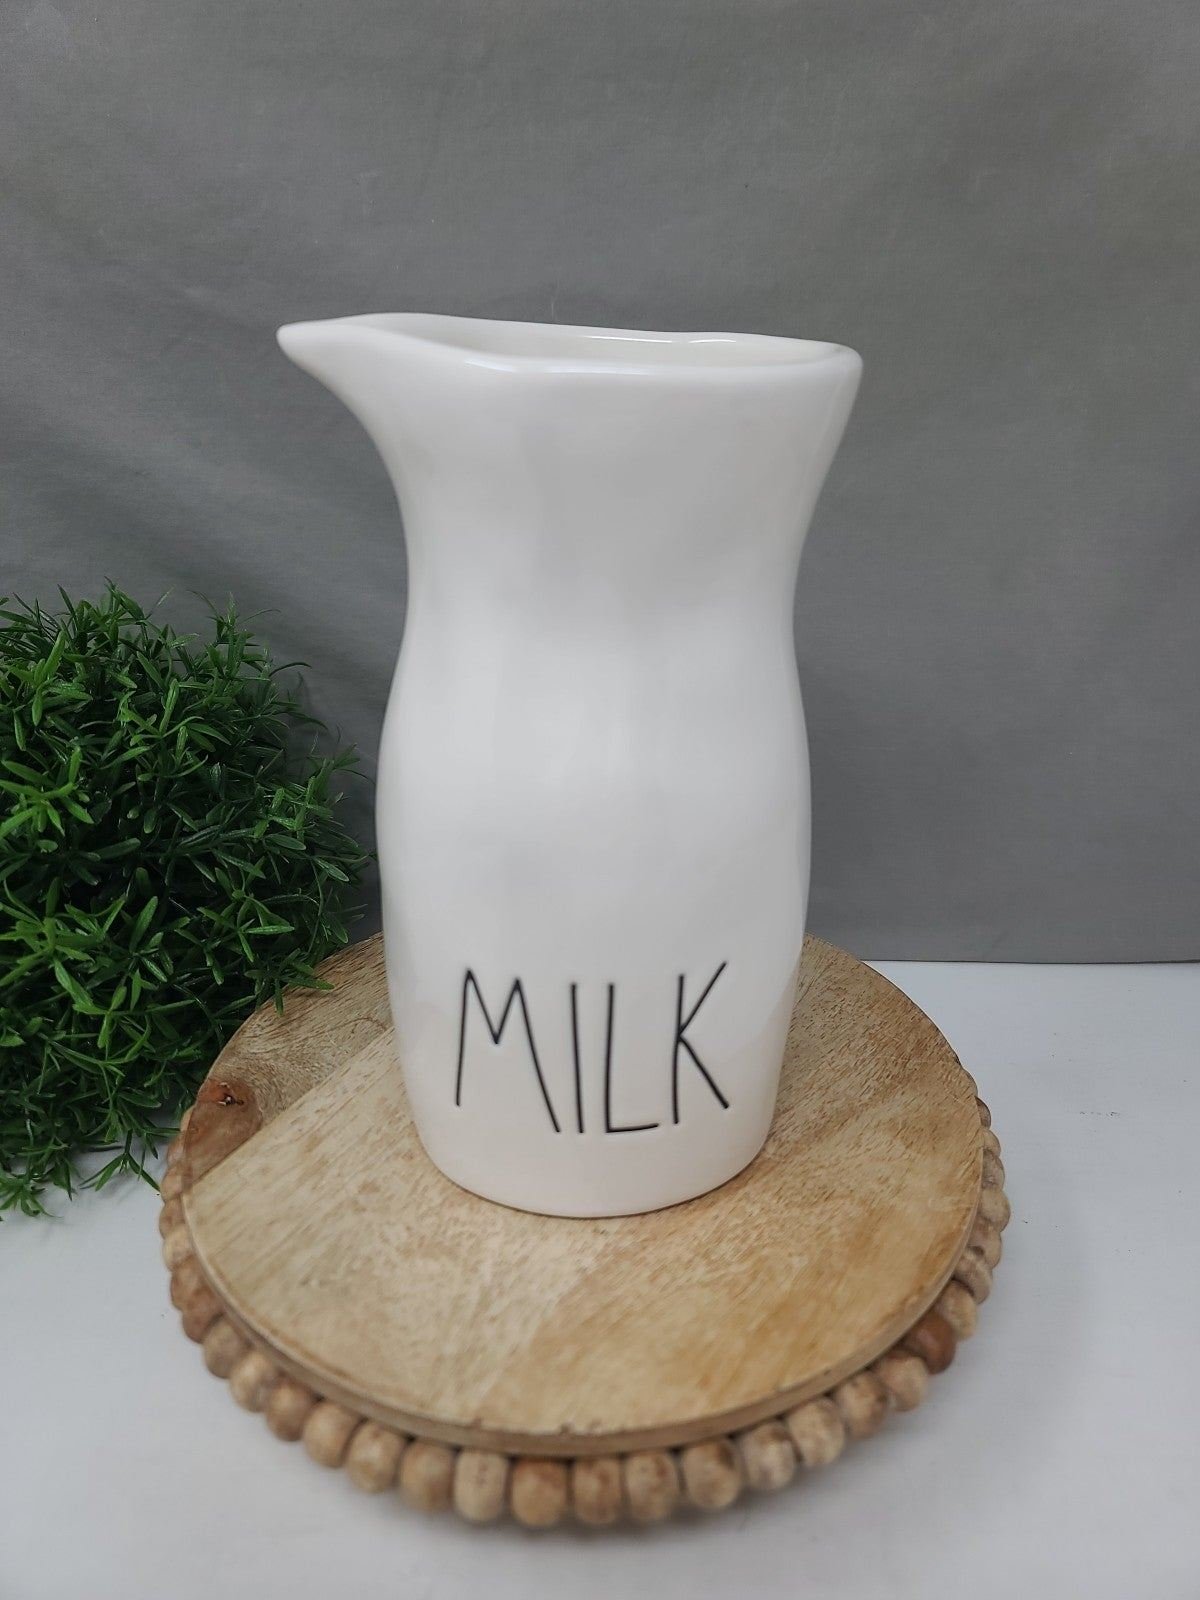 Rae Dunn Classic Ivory Milk Carafe aGucafUx9